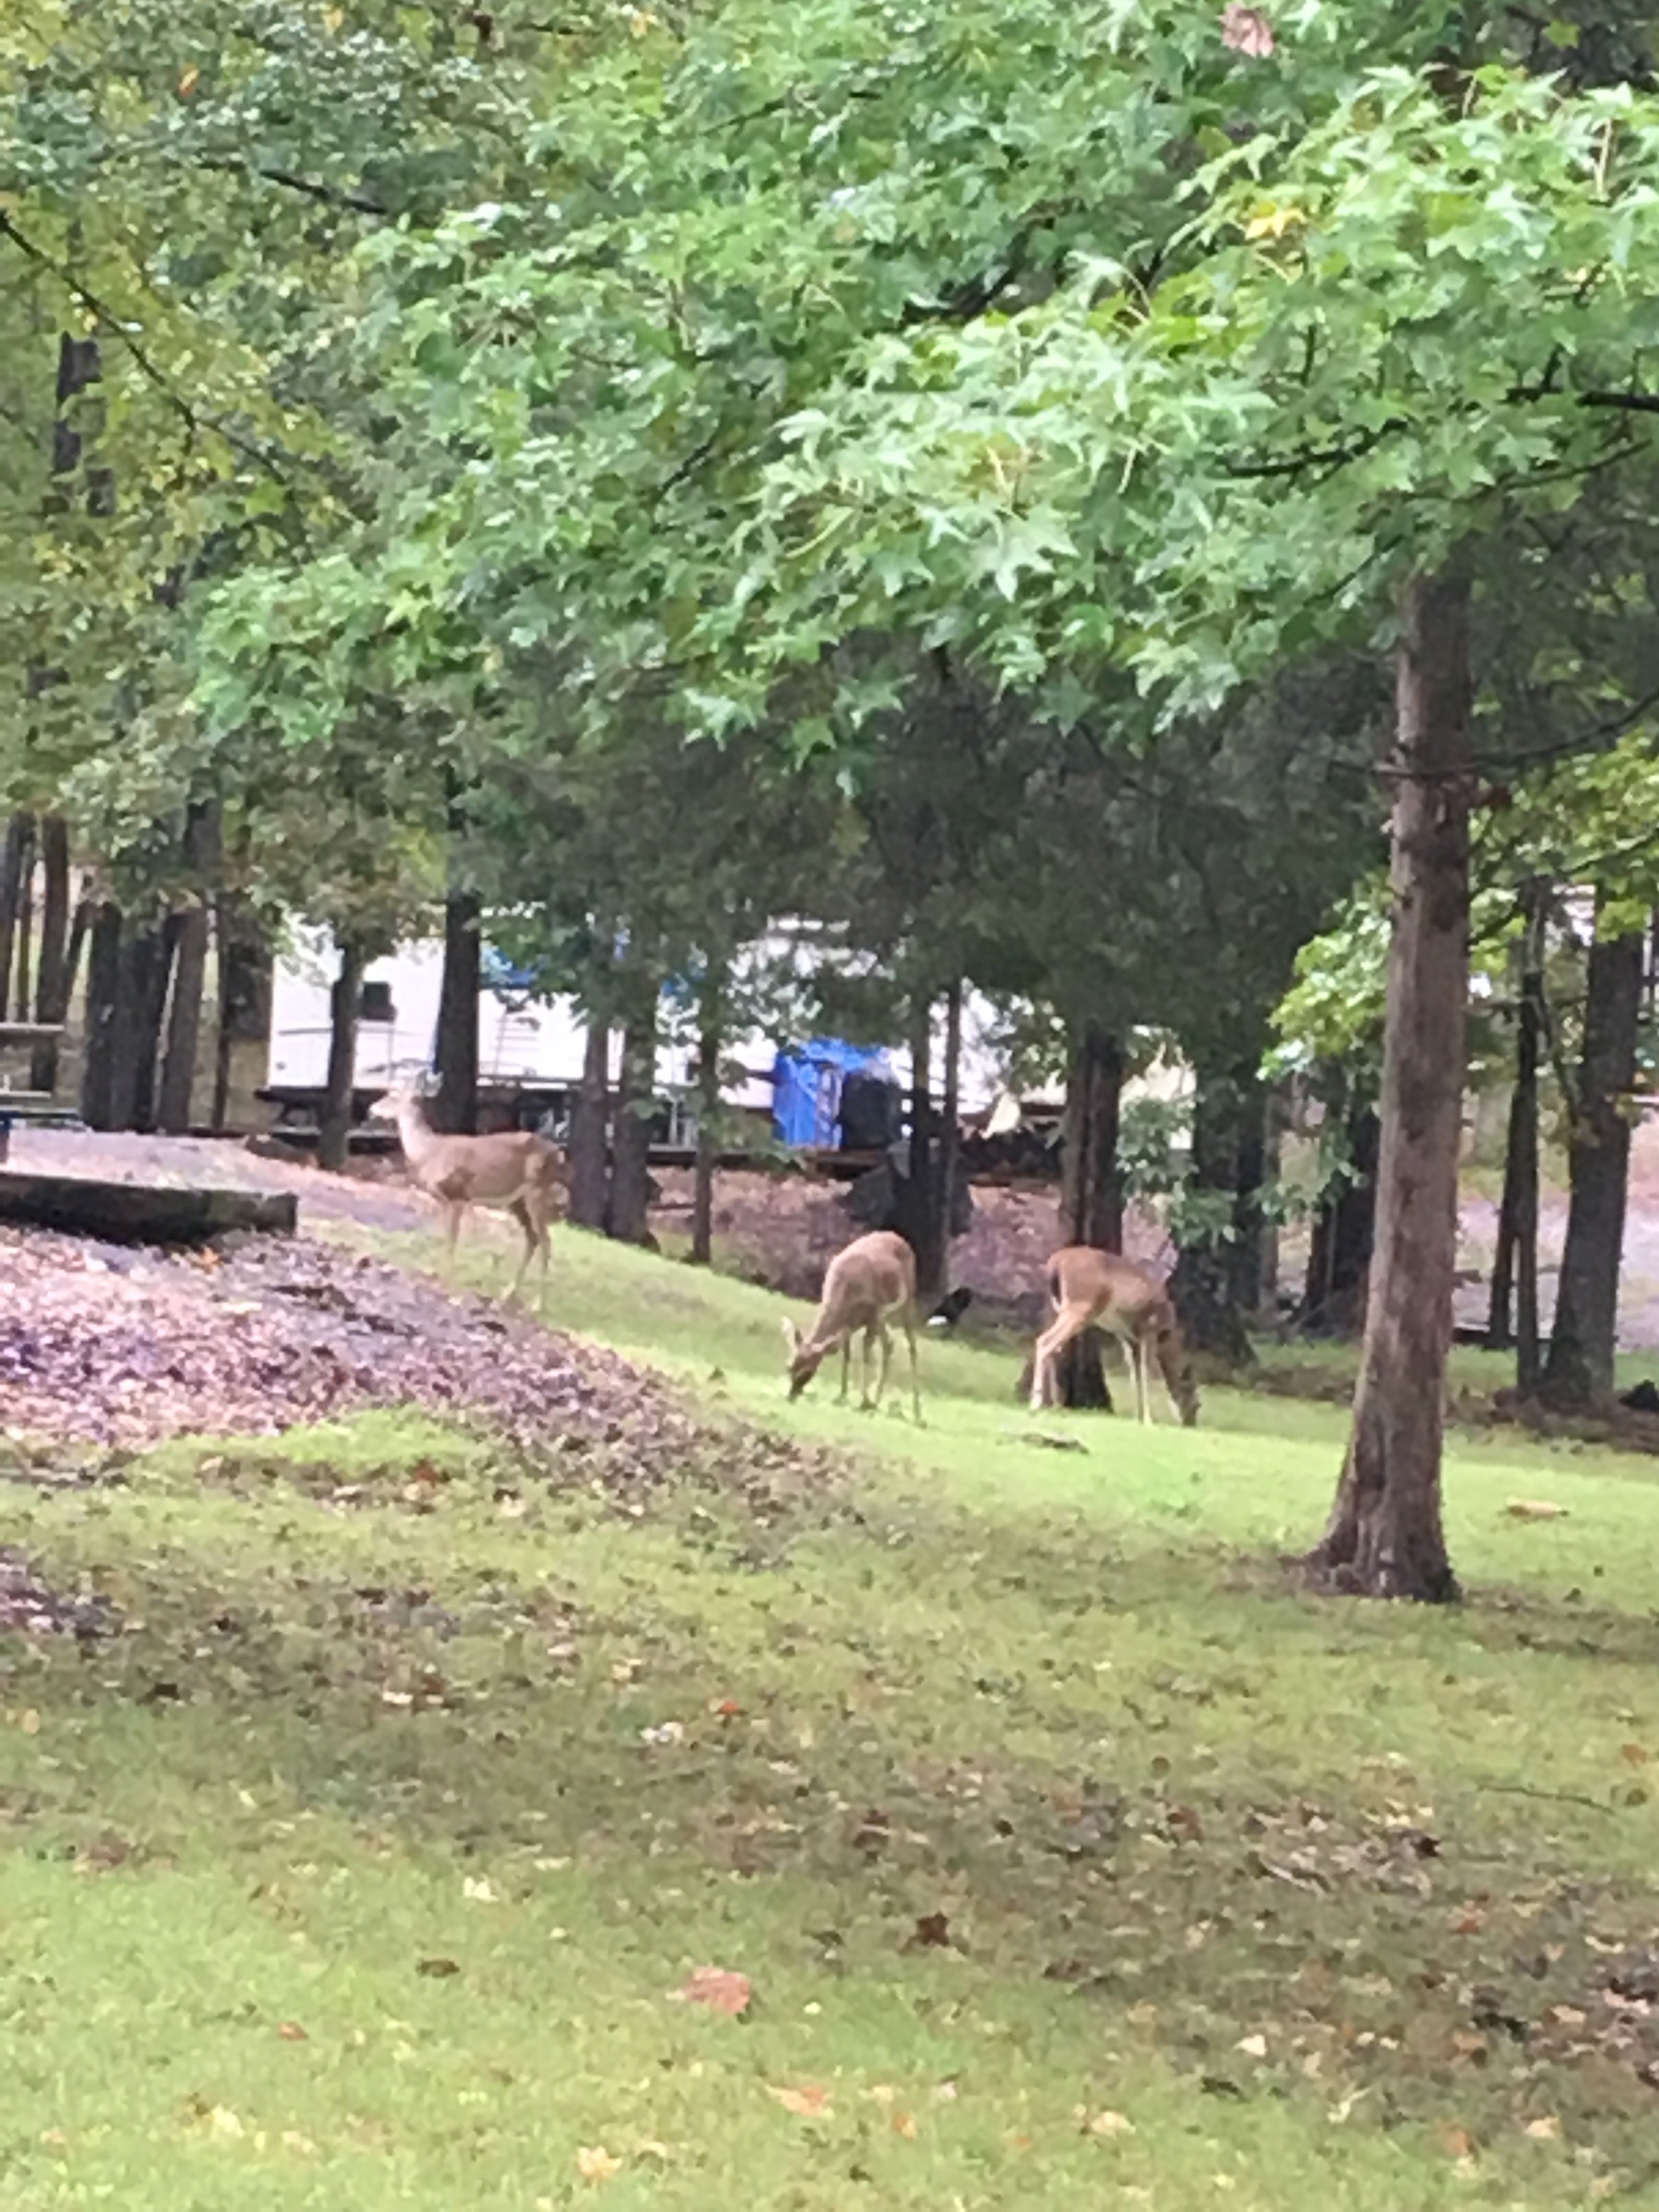 Deer were everywhere around the campground